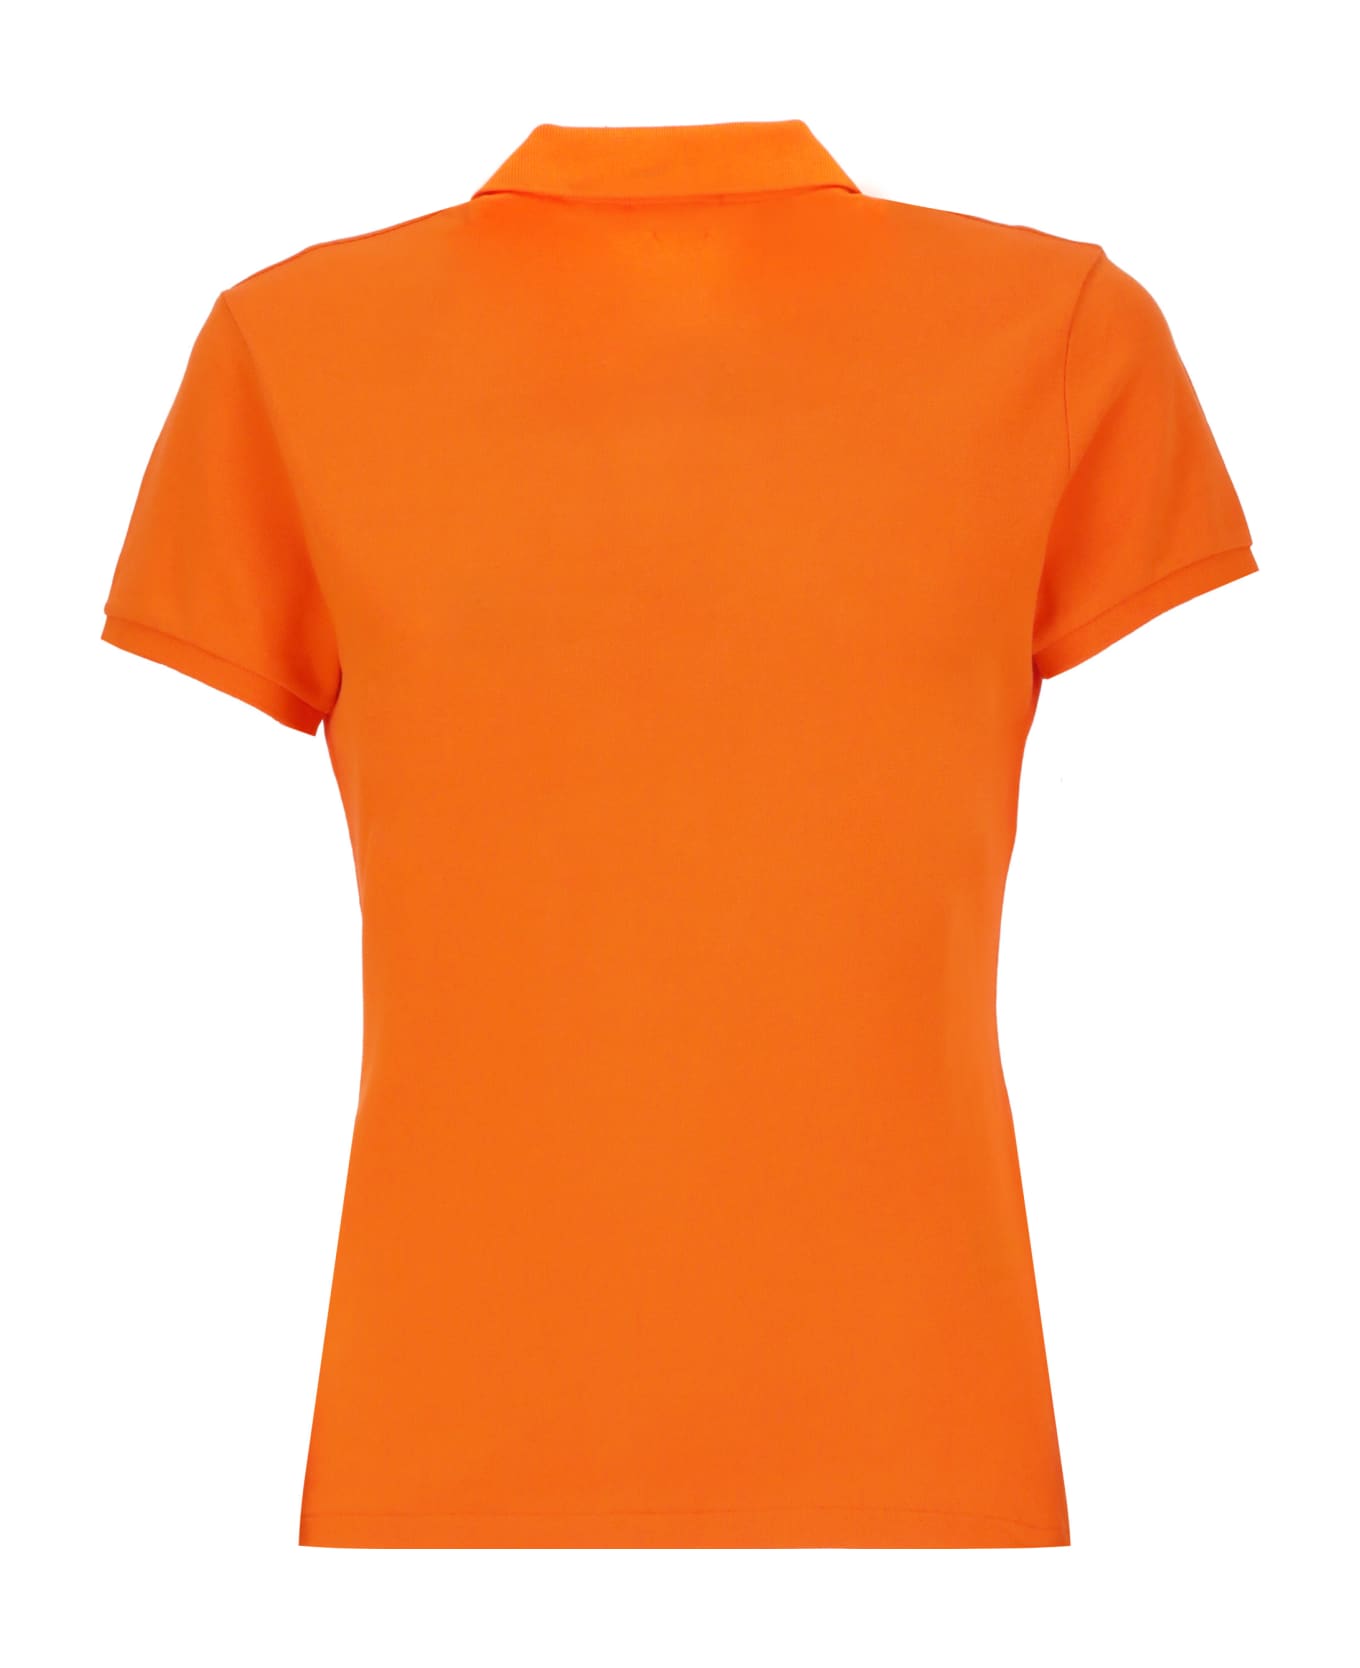 Ralph Lauren Polo Shirt - Orange